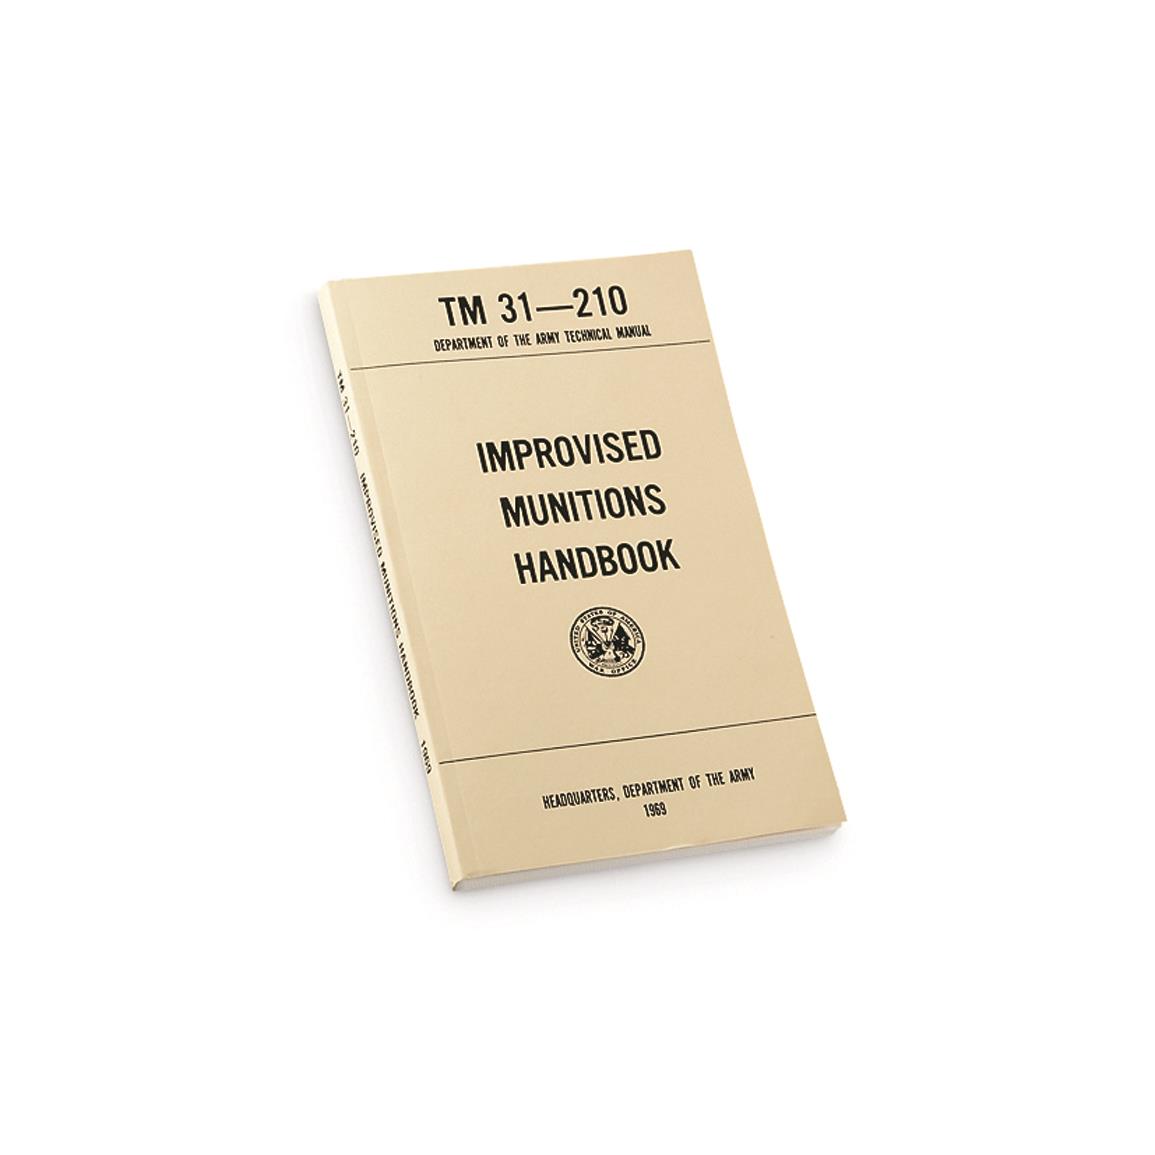 New U.S. Military Surplus Technical Manual on Improvised Munitions